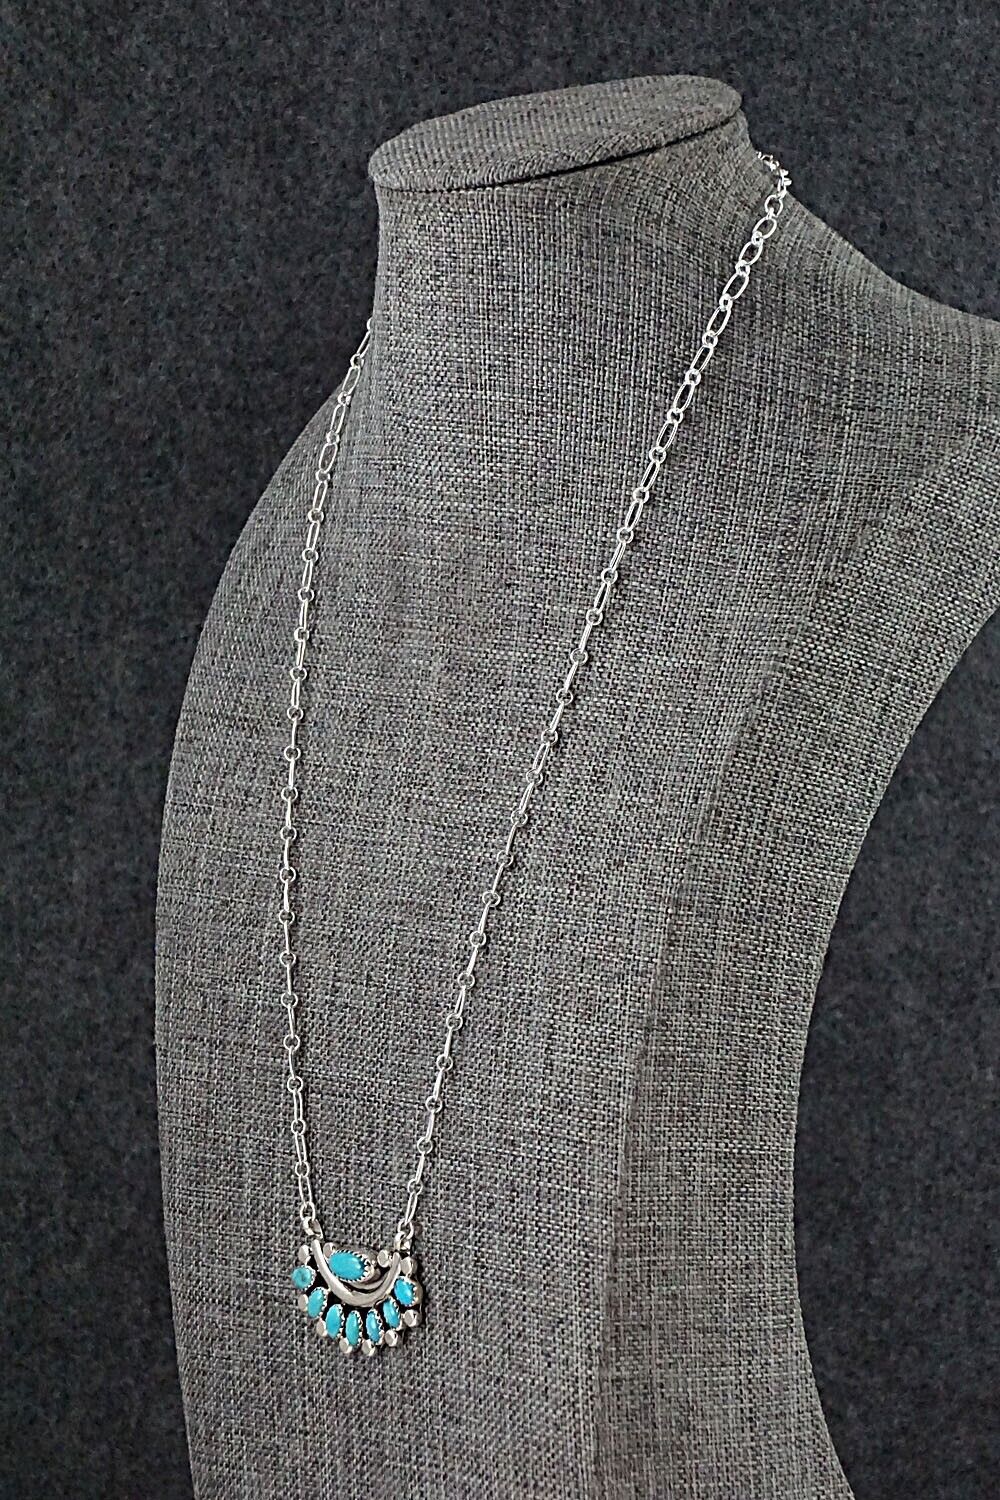 Turquoise & Sterling Silver Necklace - Sandra Sardo